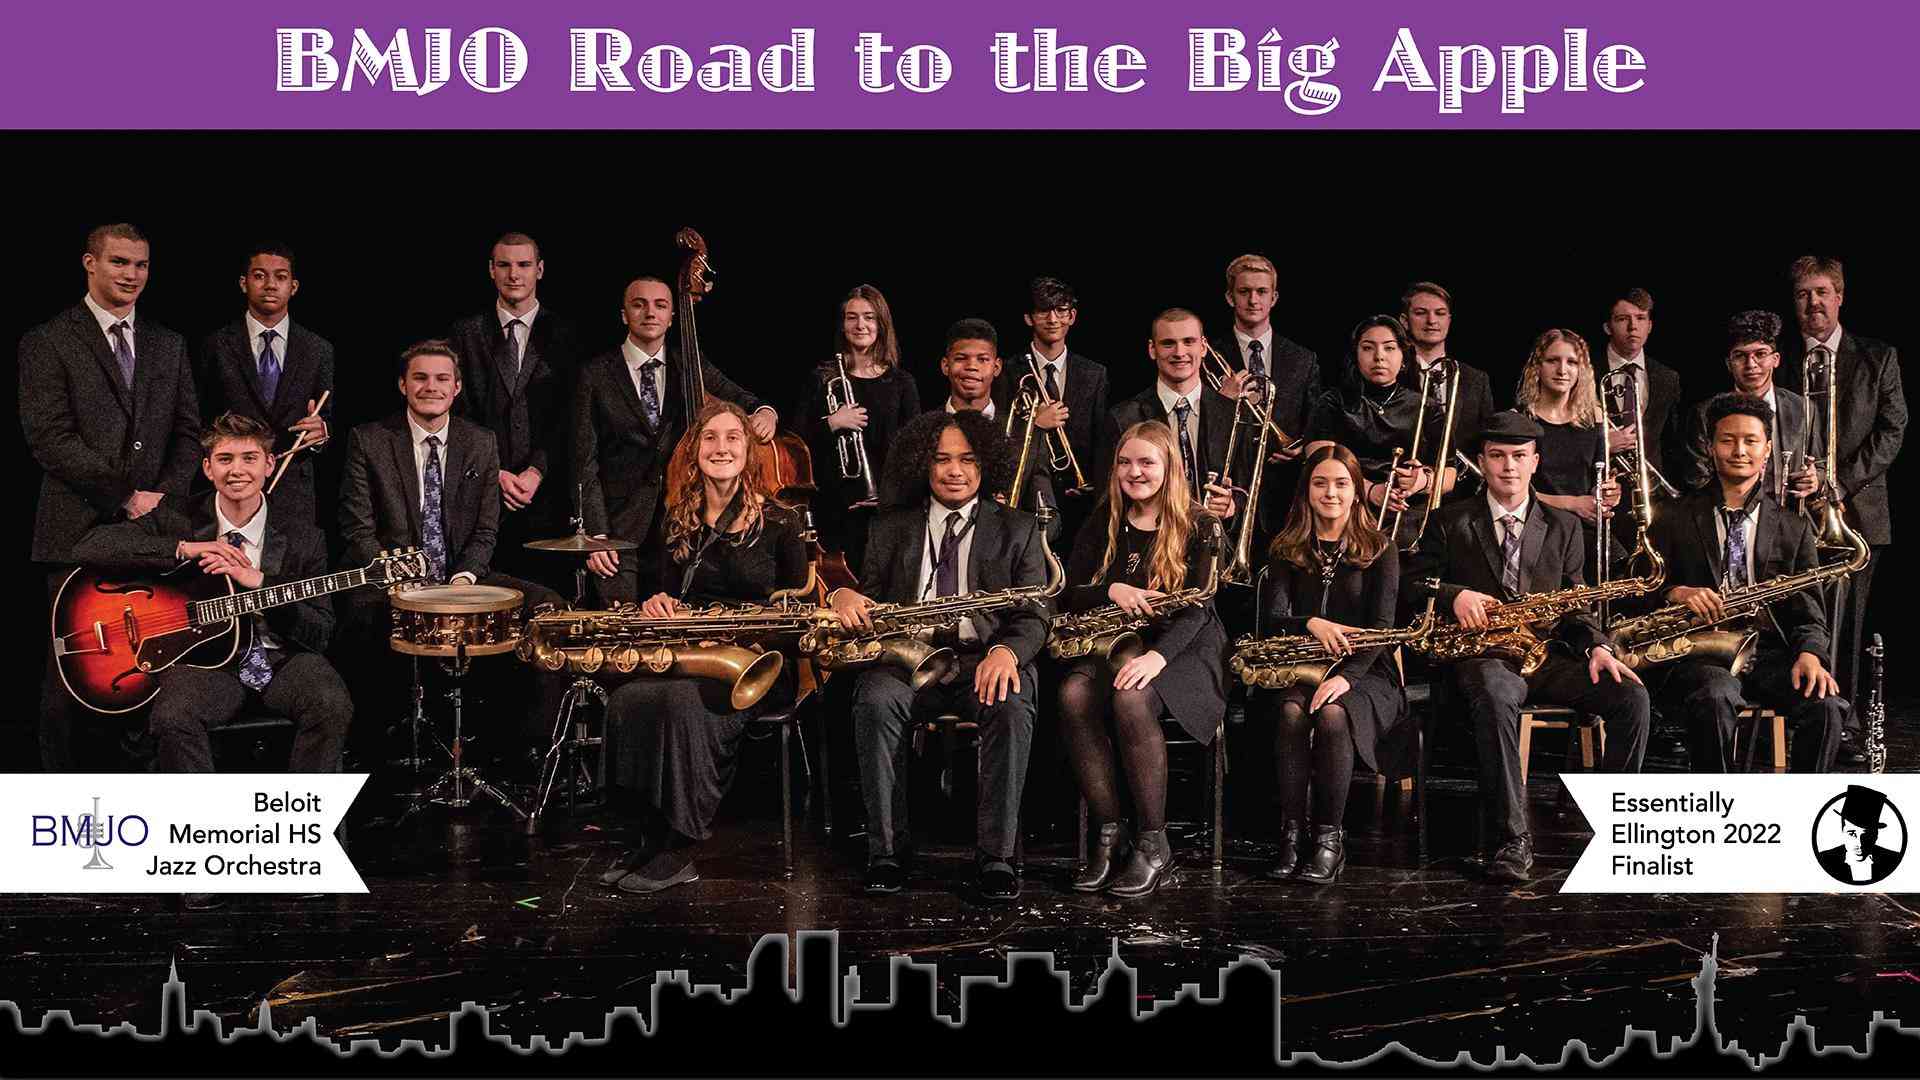 Beloit Memorial Jazz Orchestra - Back to the Big Apple - Essentially Ellington 2022 Finalists! Image